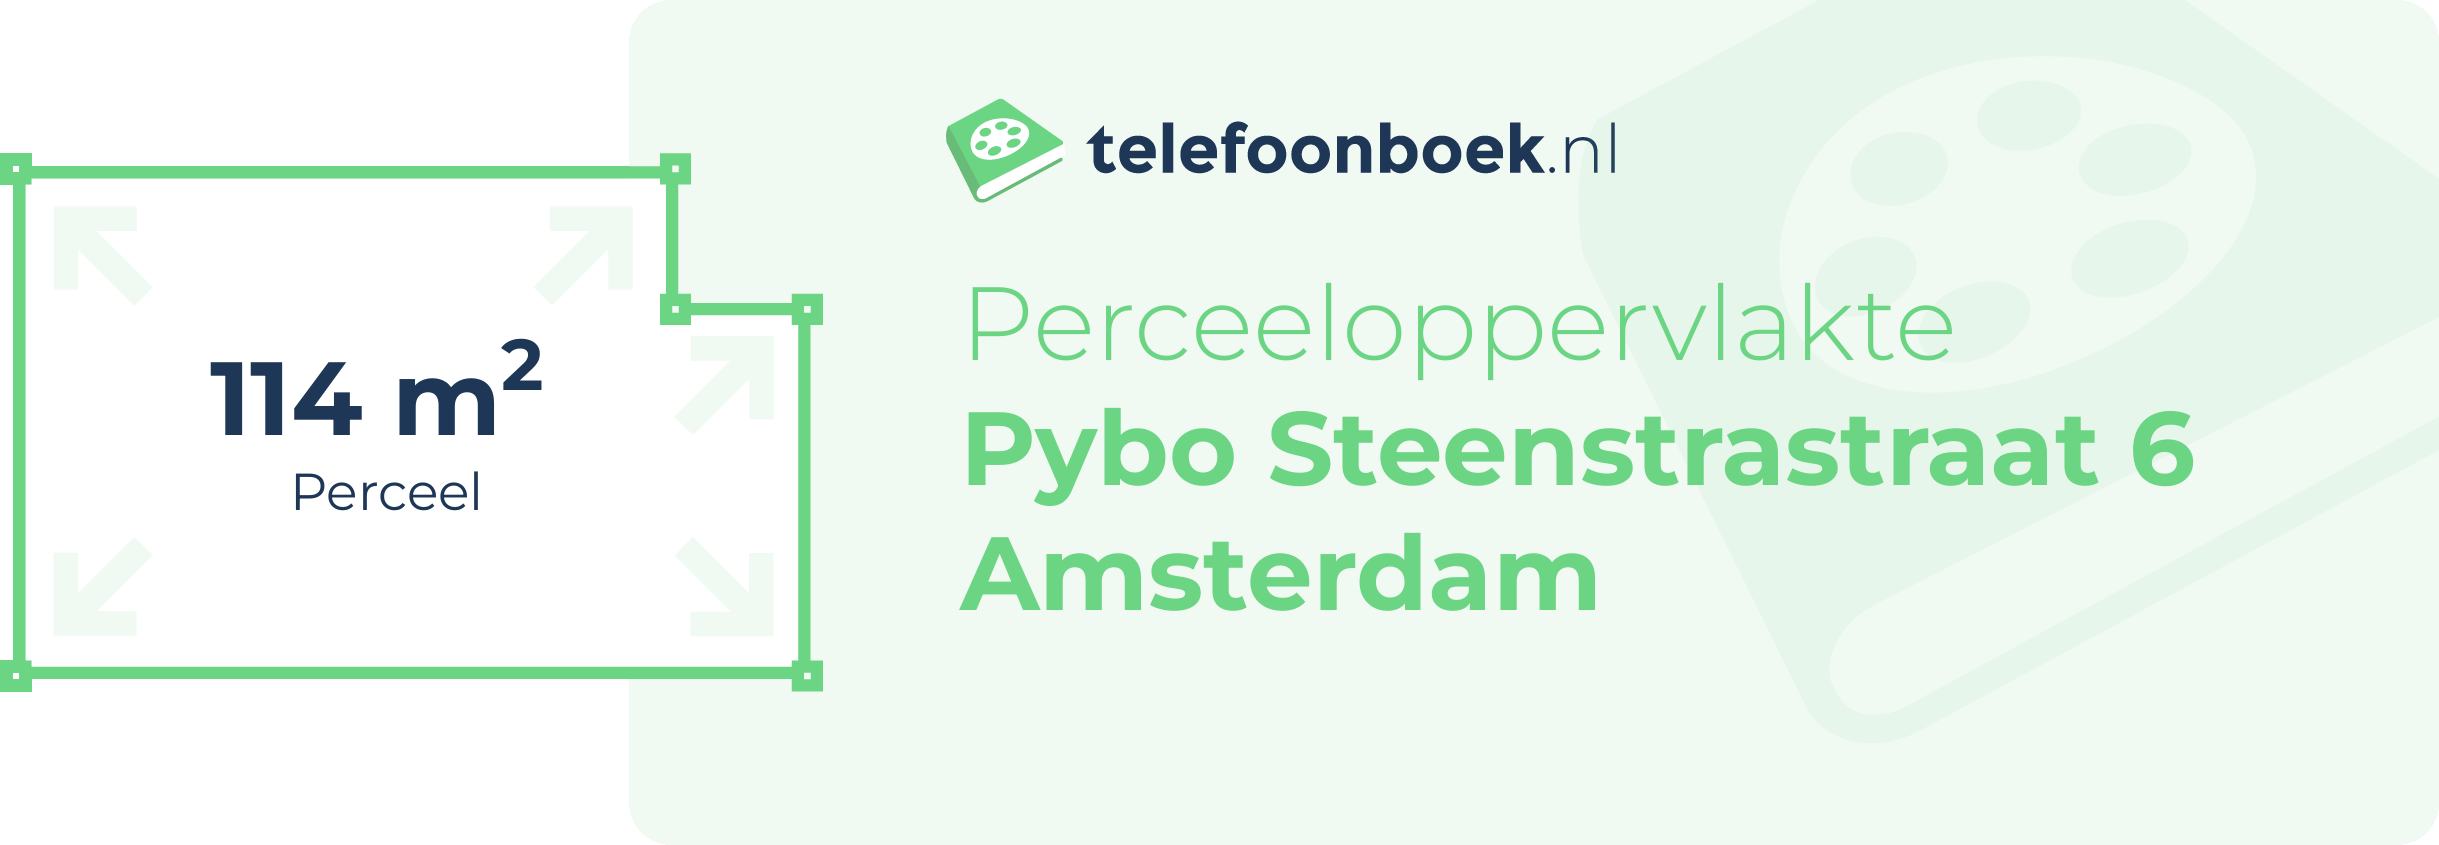 Perceeloppervlakte Pybo Steenstrastraat 6 Amsterdam